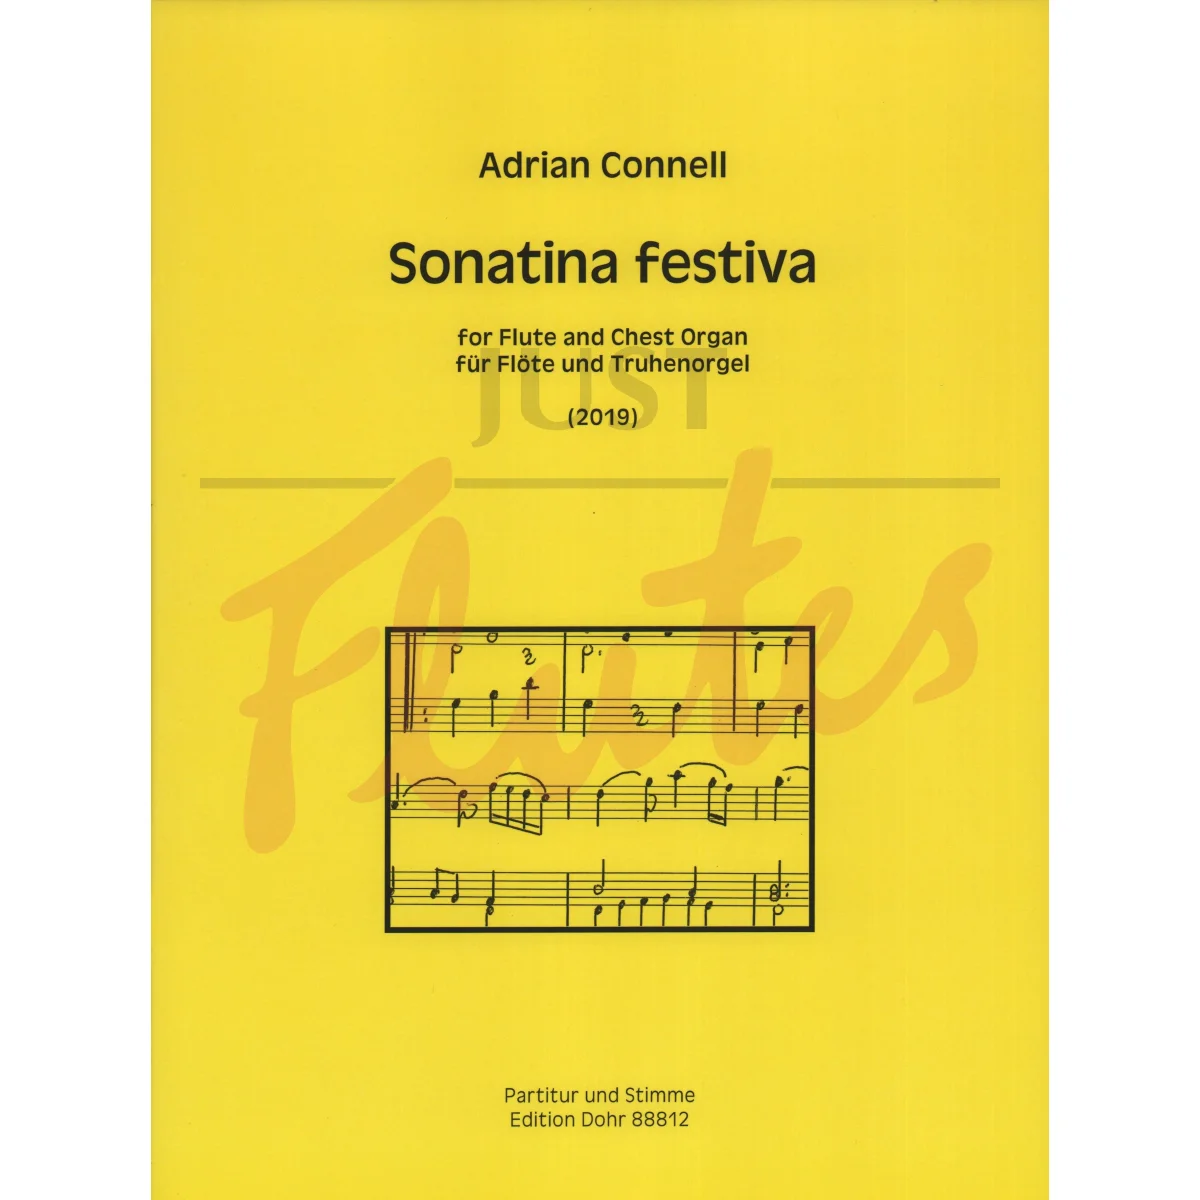 Sonatina Festiva for Flute and Chest Organ